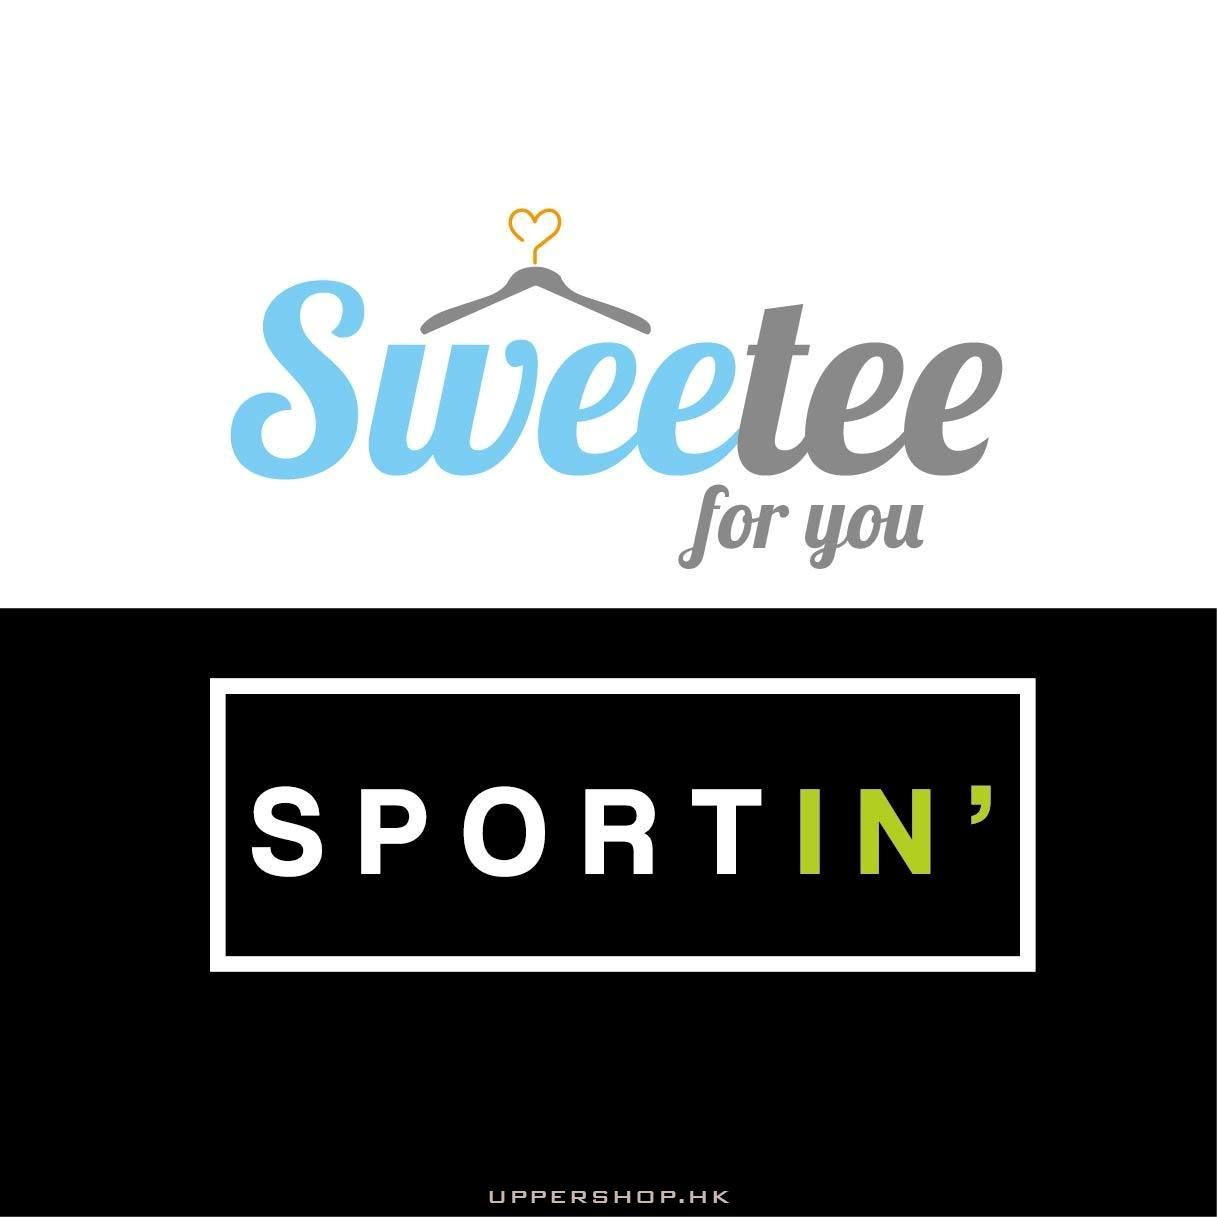 Sweetee & Sportin' - Customize Your Apparel